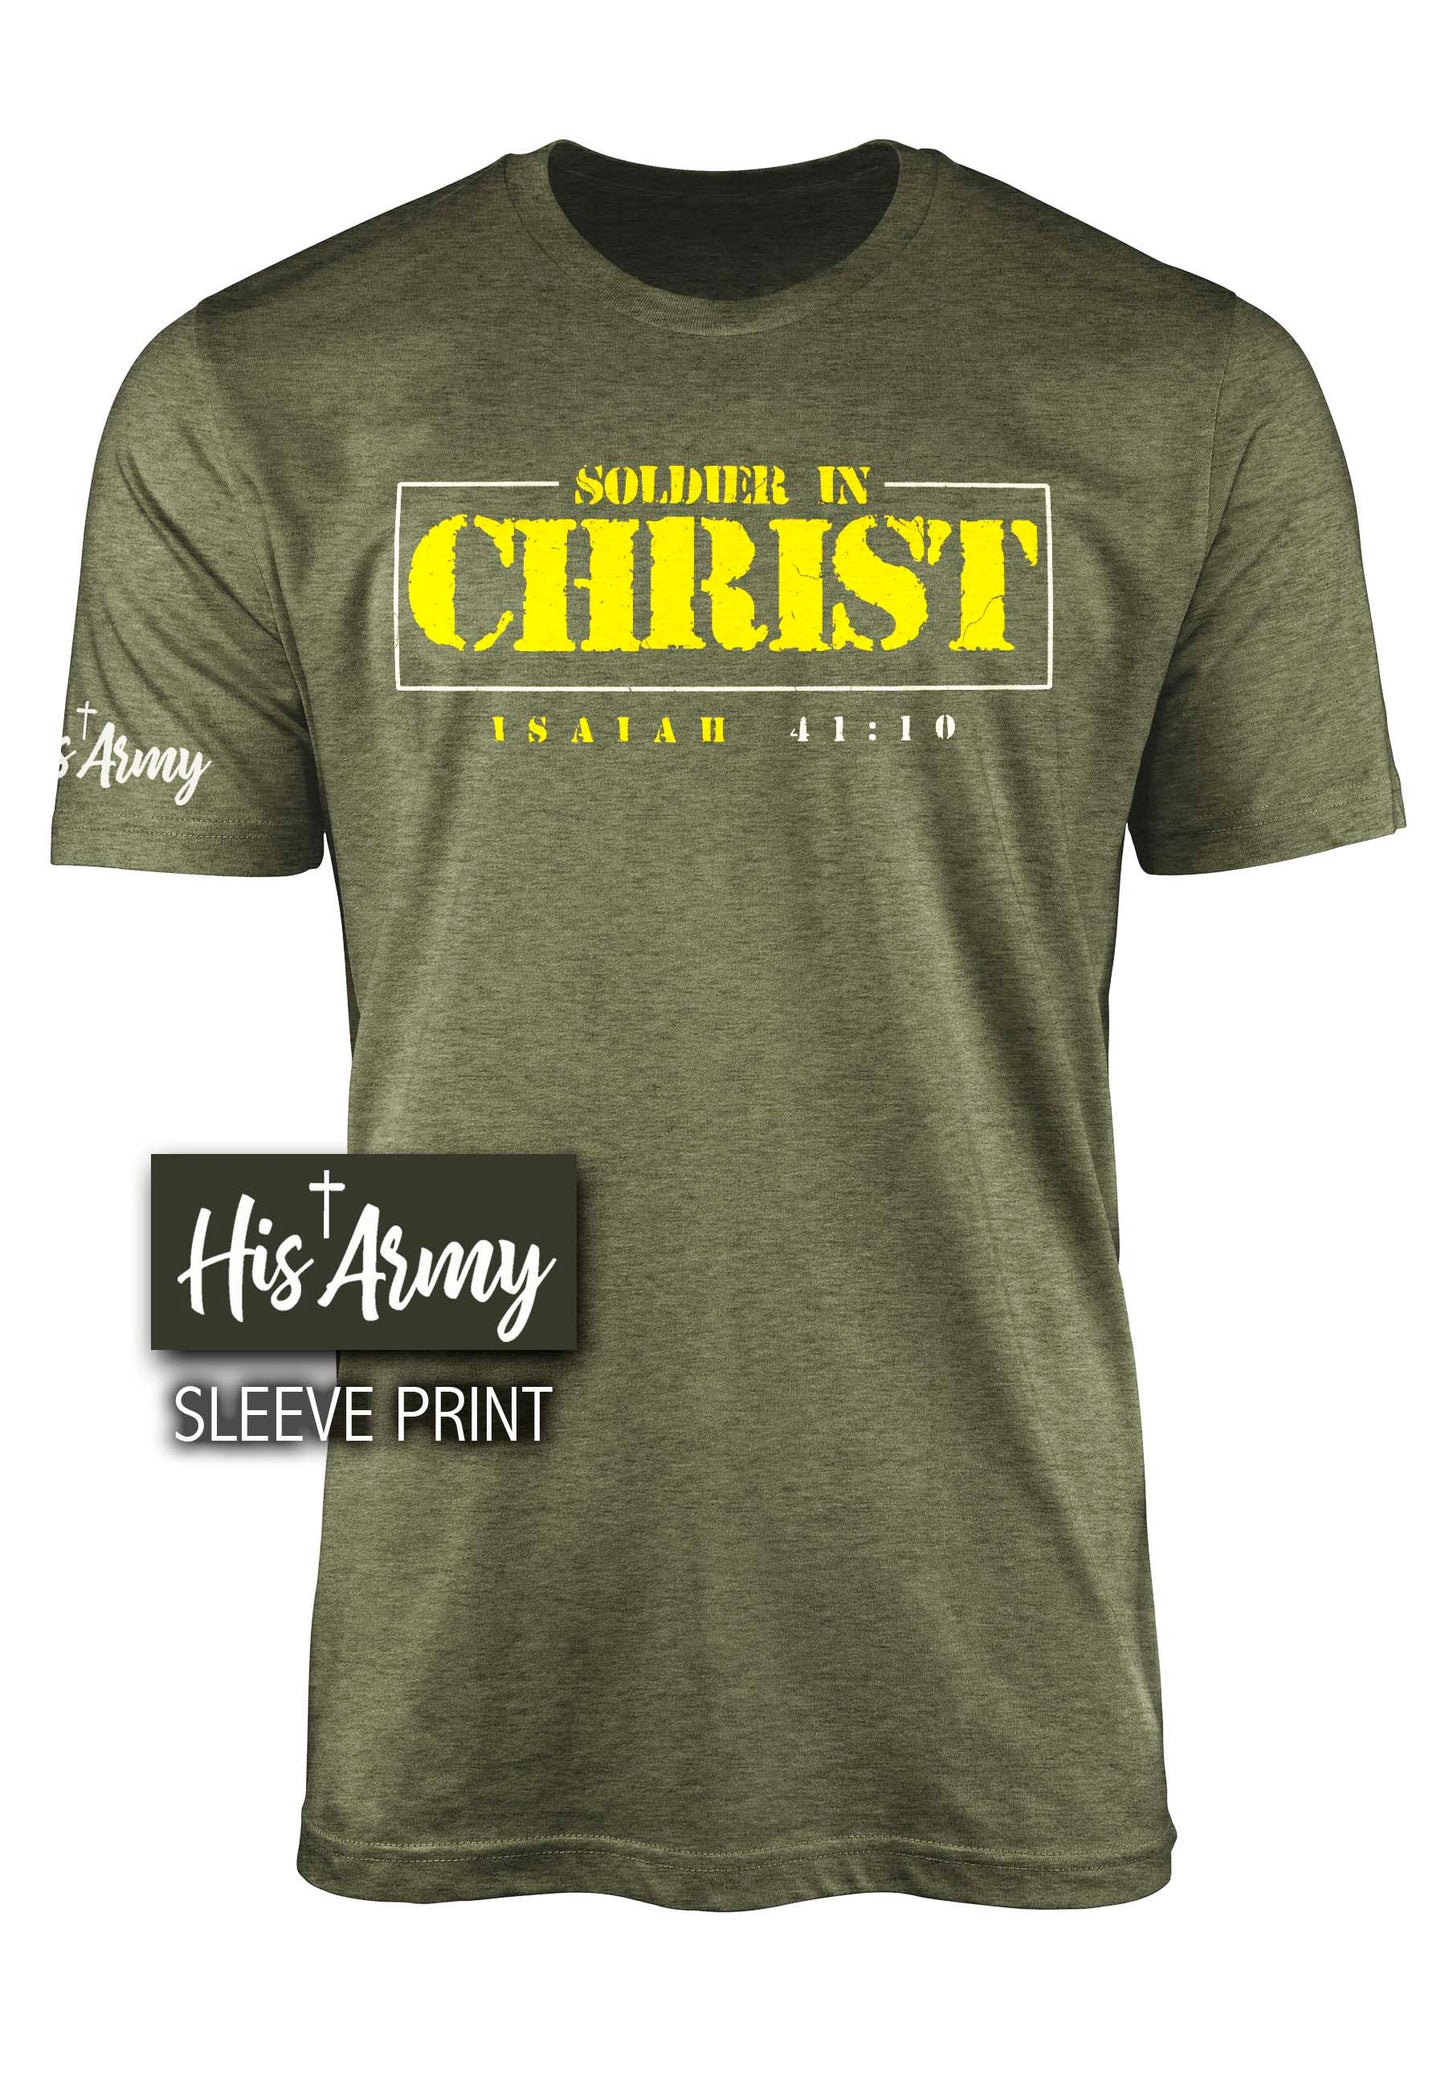 Christian t-shirt with sleeve print